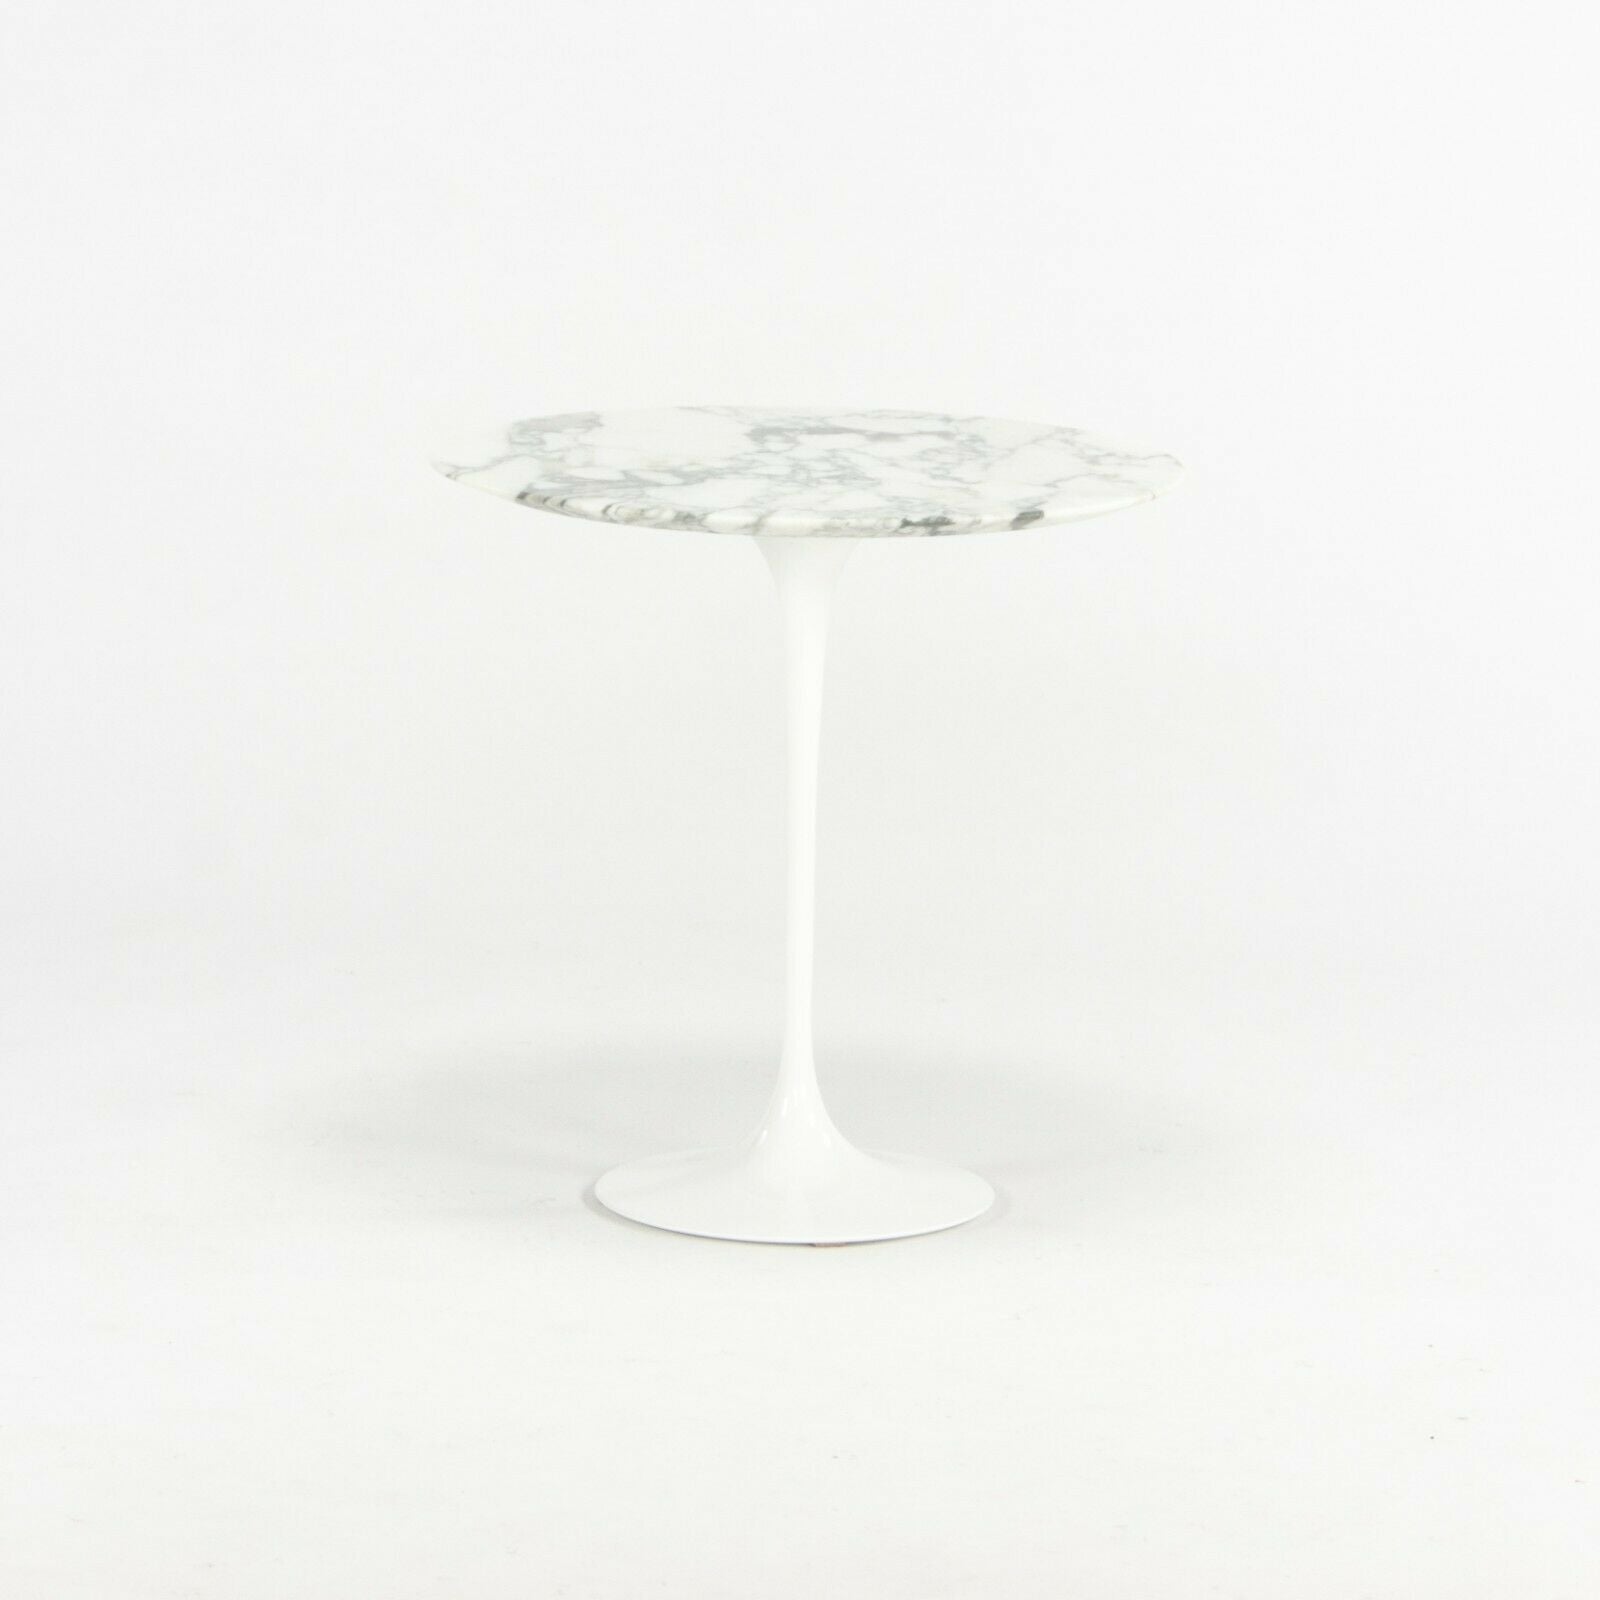 SOLD 2019 Eero Saarinen for Knoll Tulip 20 inch Round Side Table in Satin Arabescato